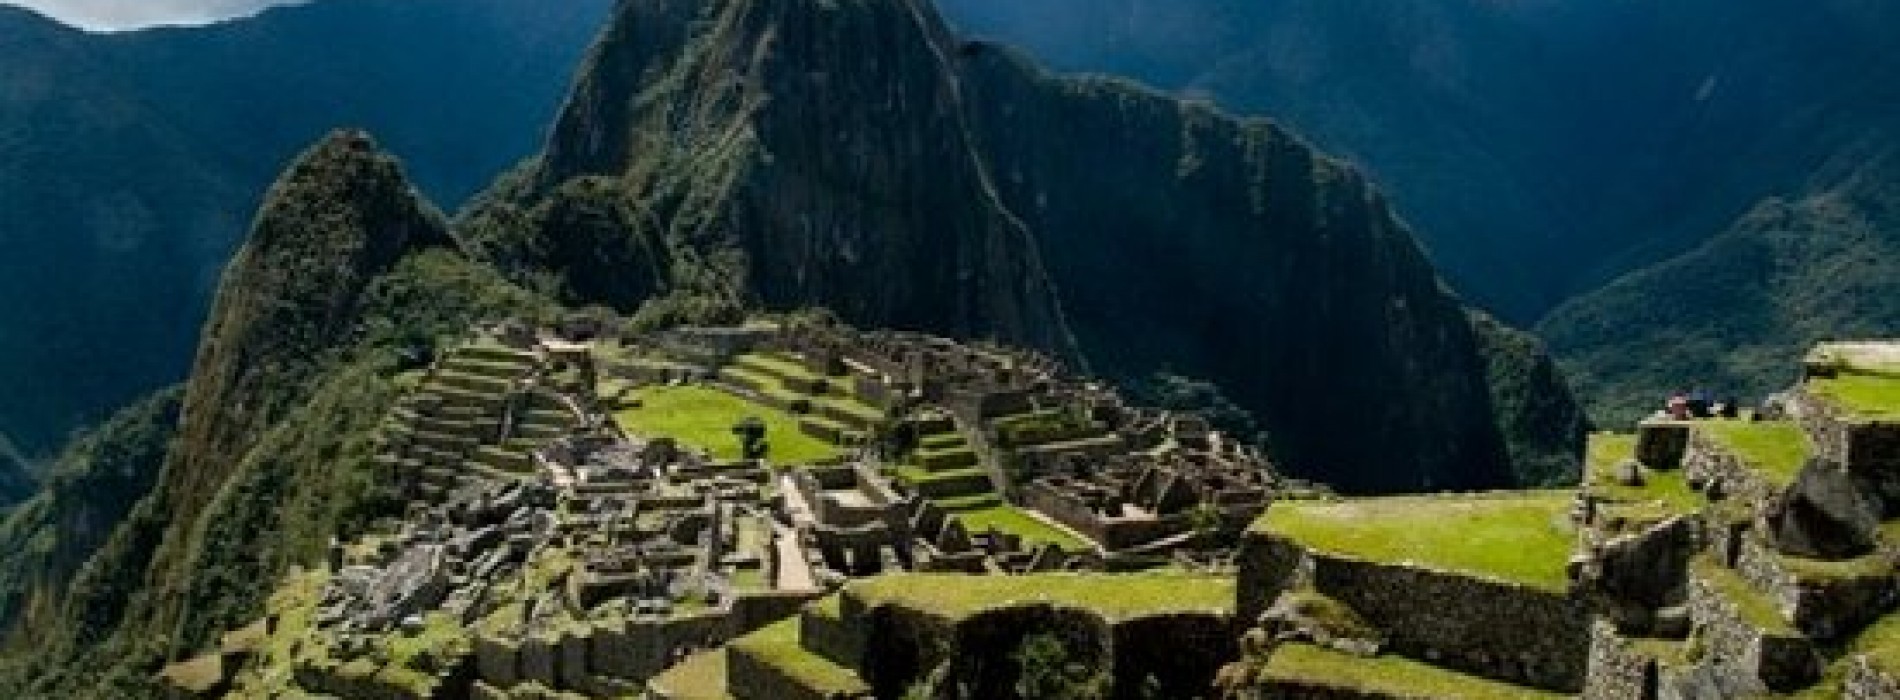 “Machu Picchu has bagged the title of travelers’ favorite landmark in a new TripAdvisor ranking